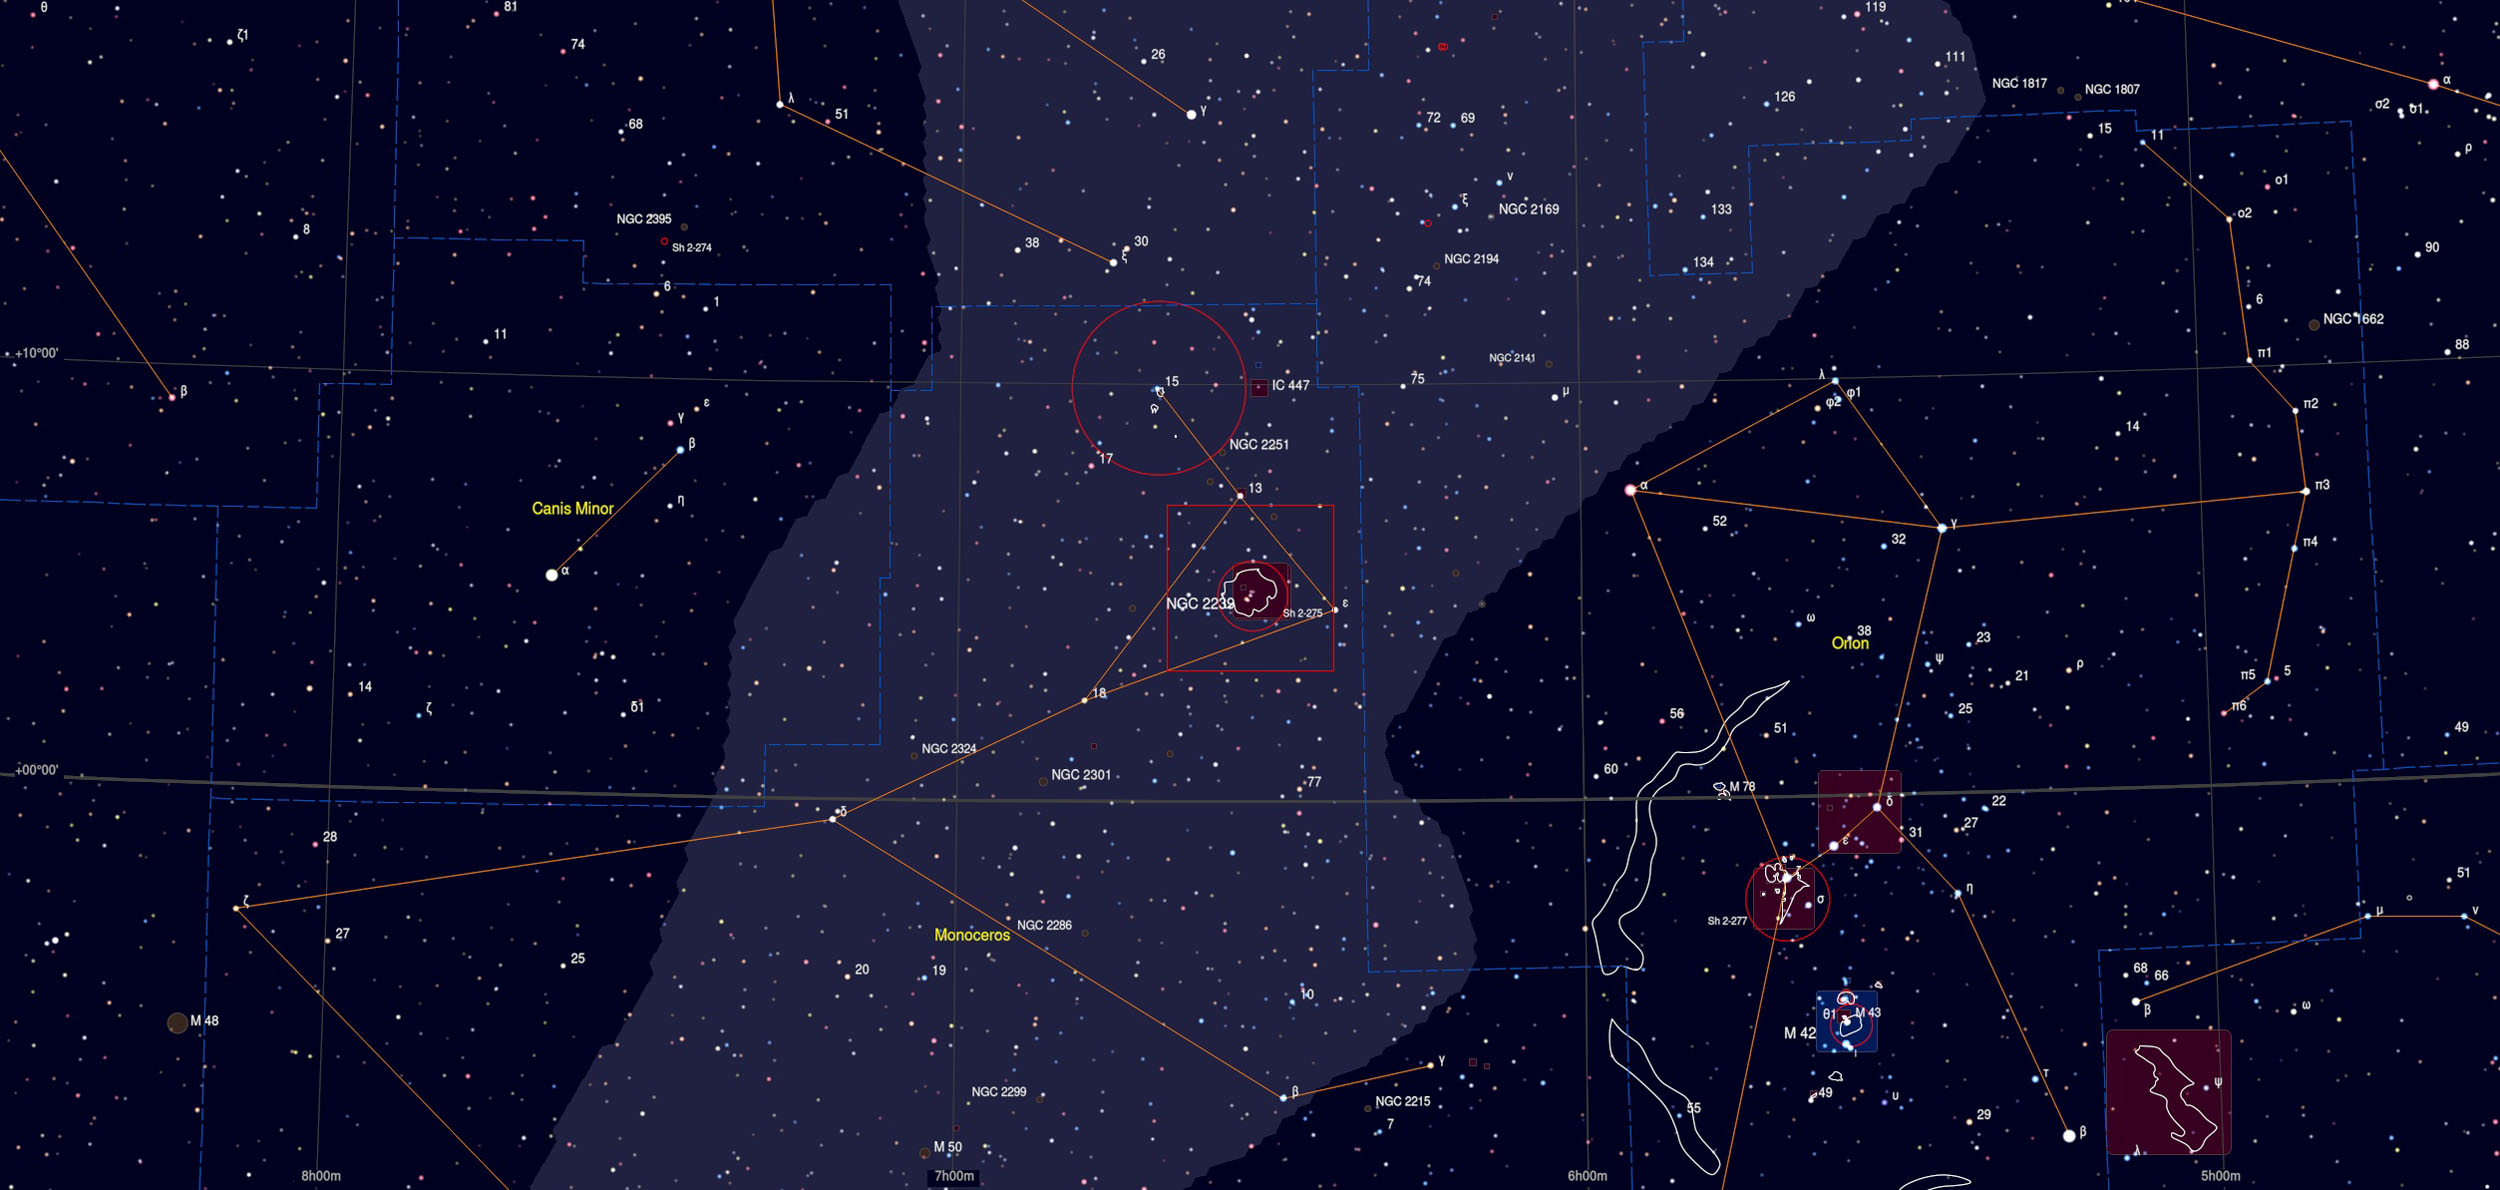 Rosette Nebula (Caldwell 49) - Astrophotography - Martin Rusterholz